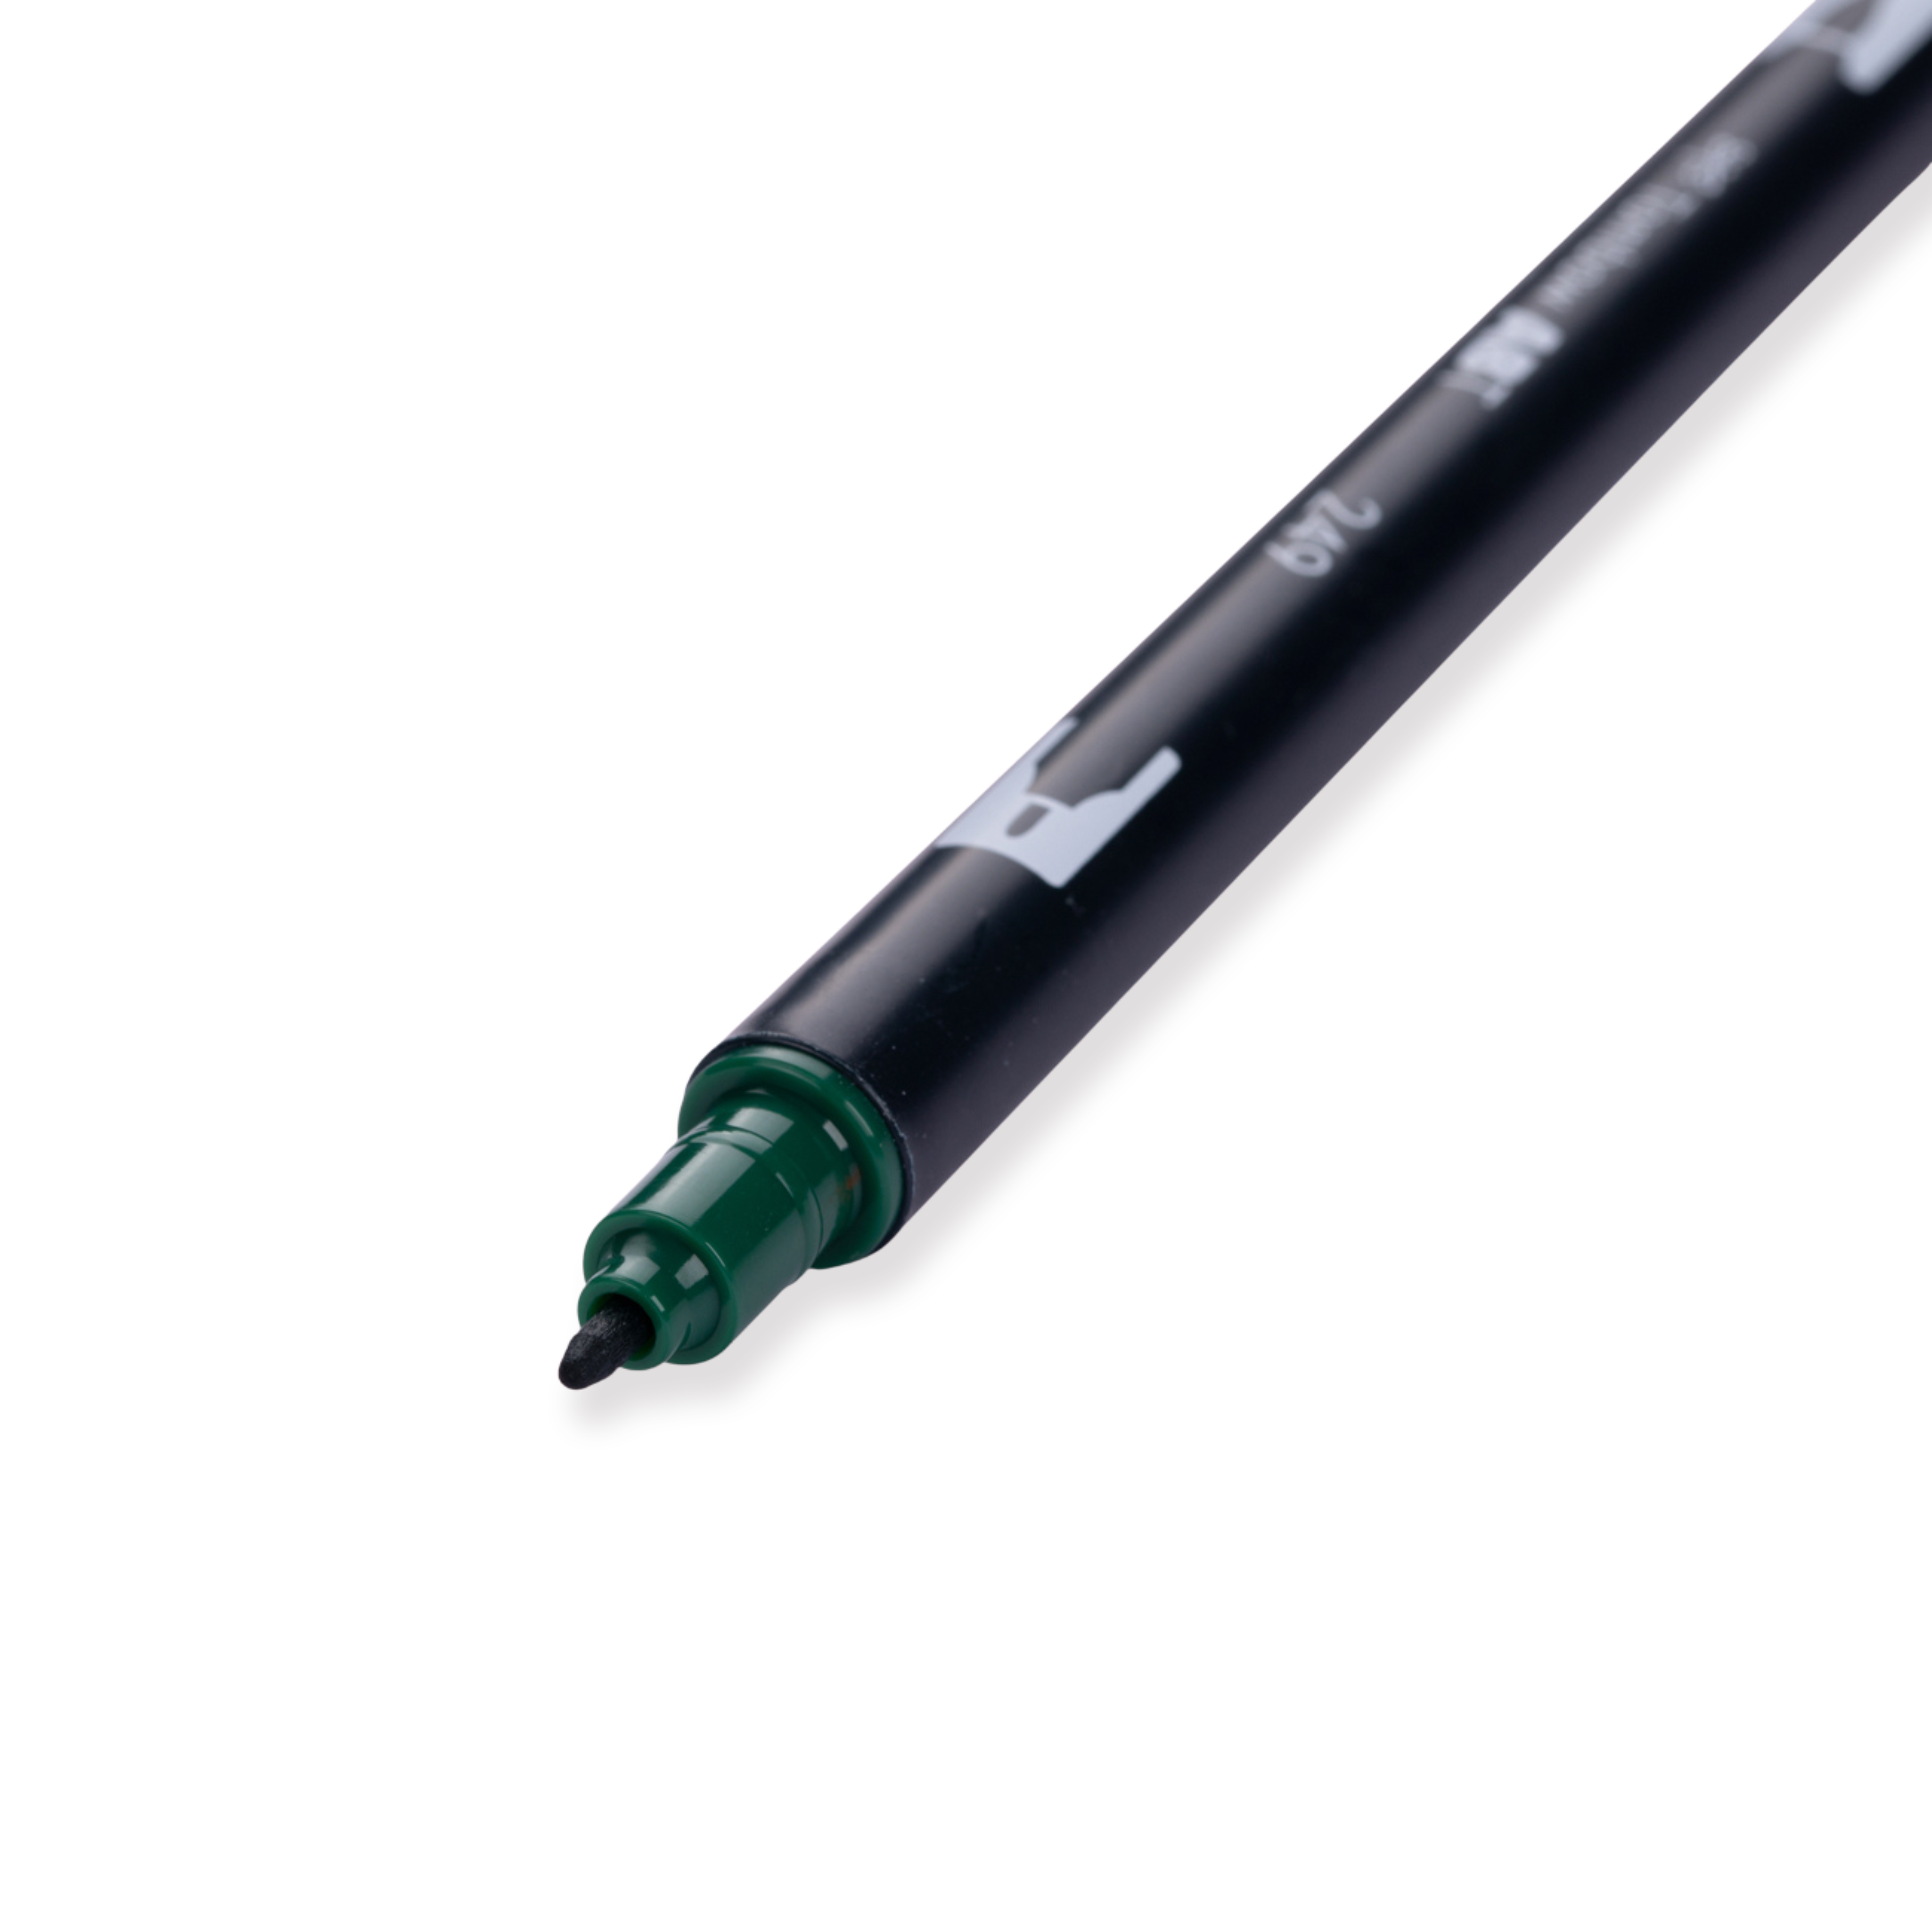 Tombow Dual Brush Pen - 249 - Hunter Green